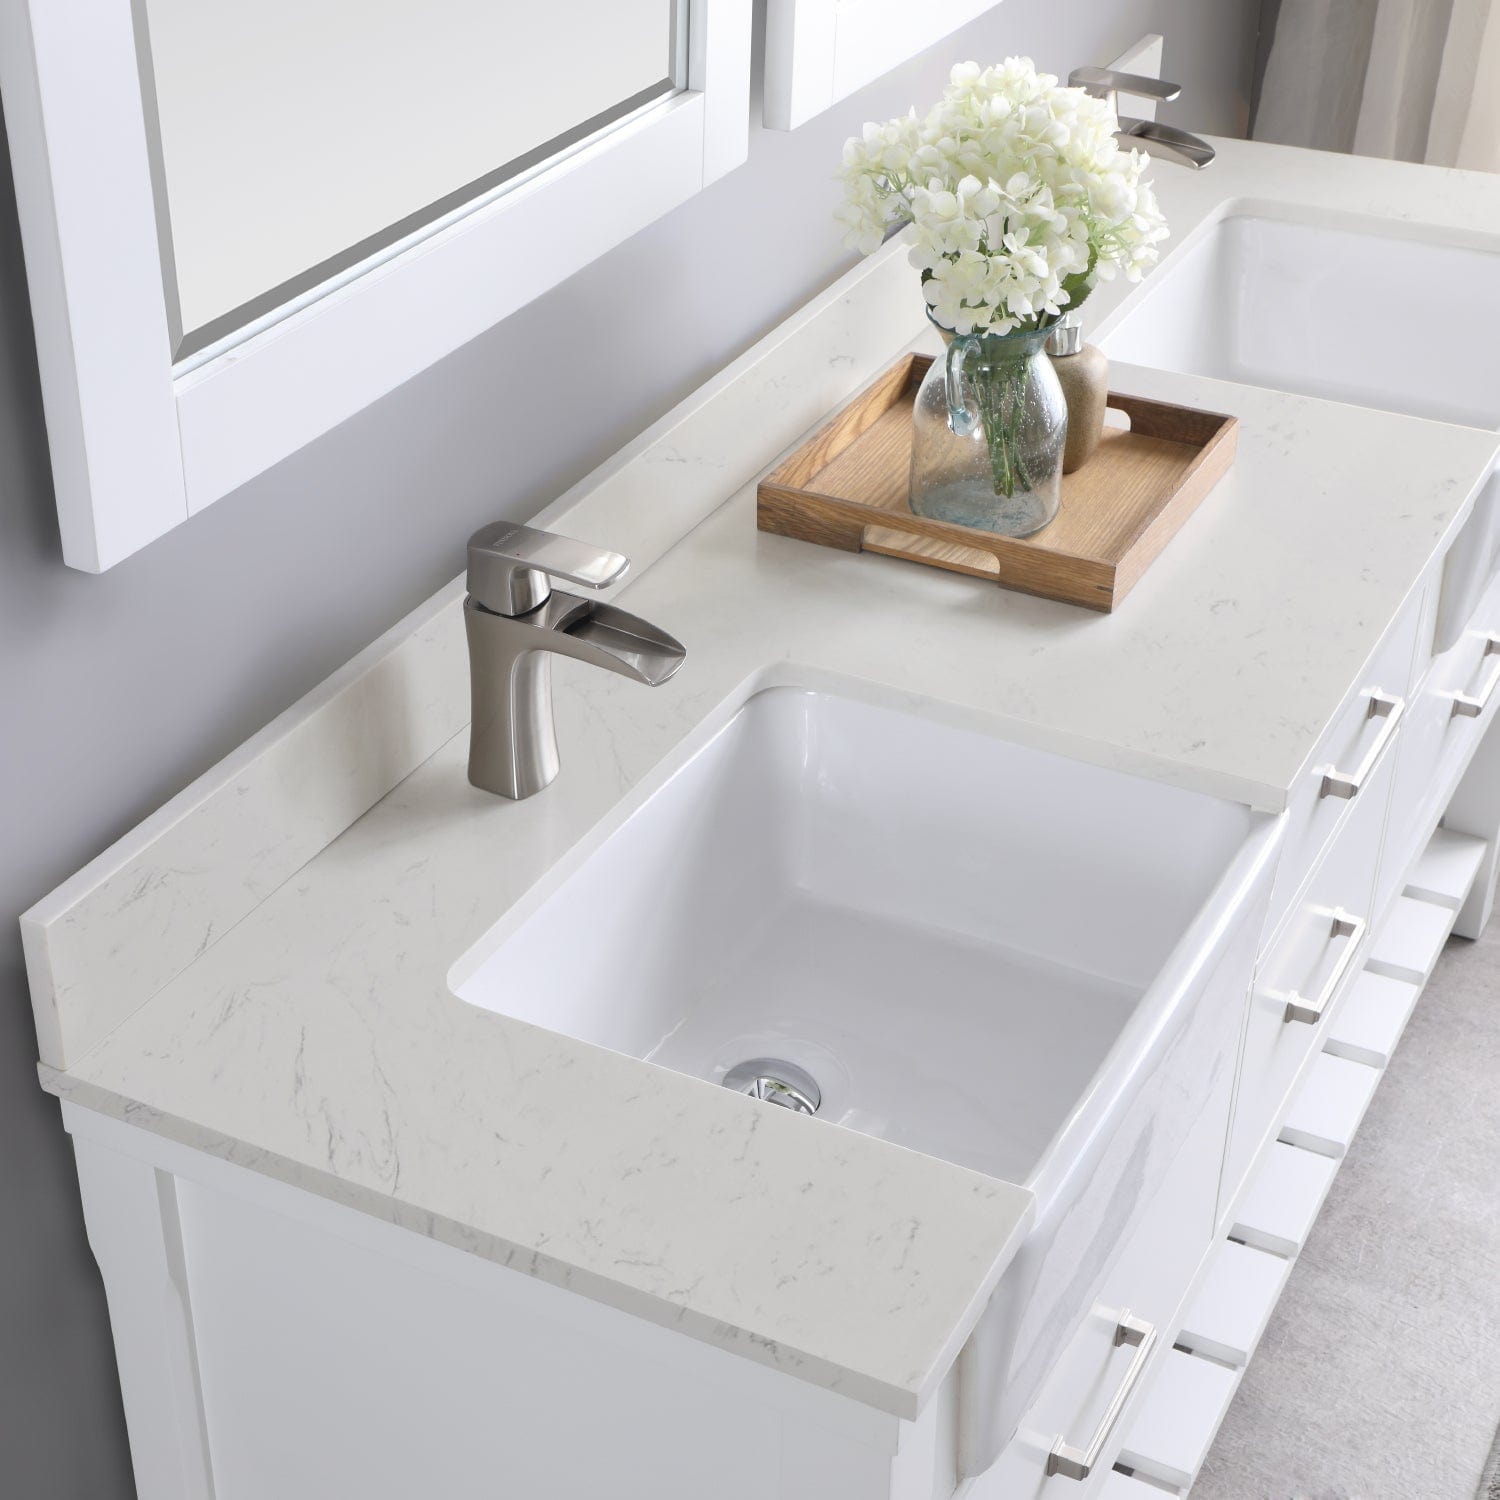 Altair Georgia 72" Double Bathroom Vanity Set in White and Composite Carrara White Stone Top with White Farmhouse Basin with Mirror 537072-WH-AW - Molaix631112970693Vanity537072-WH-AW